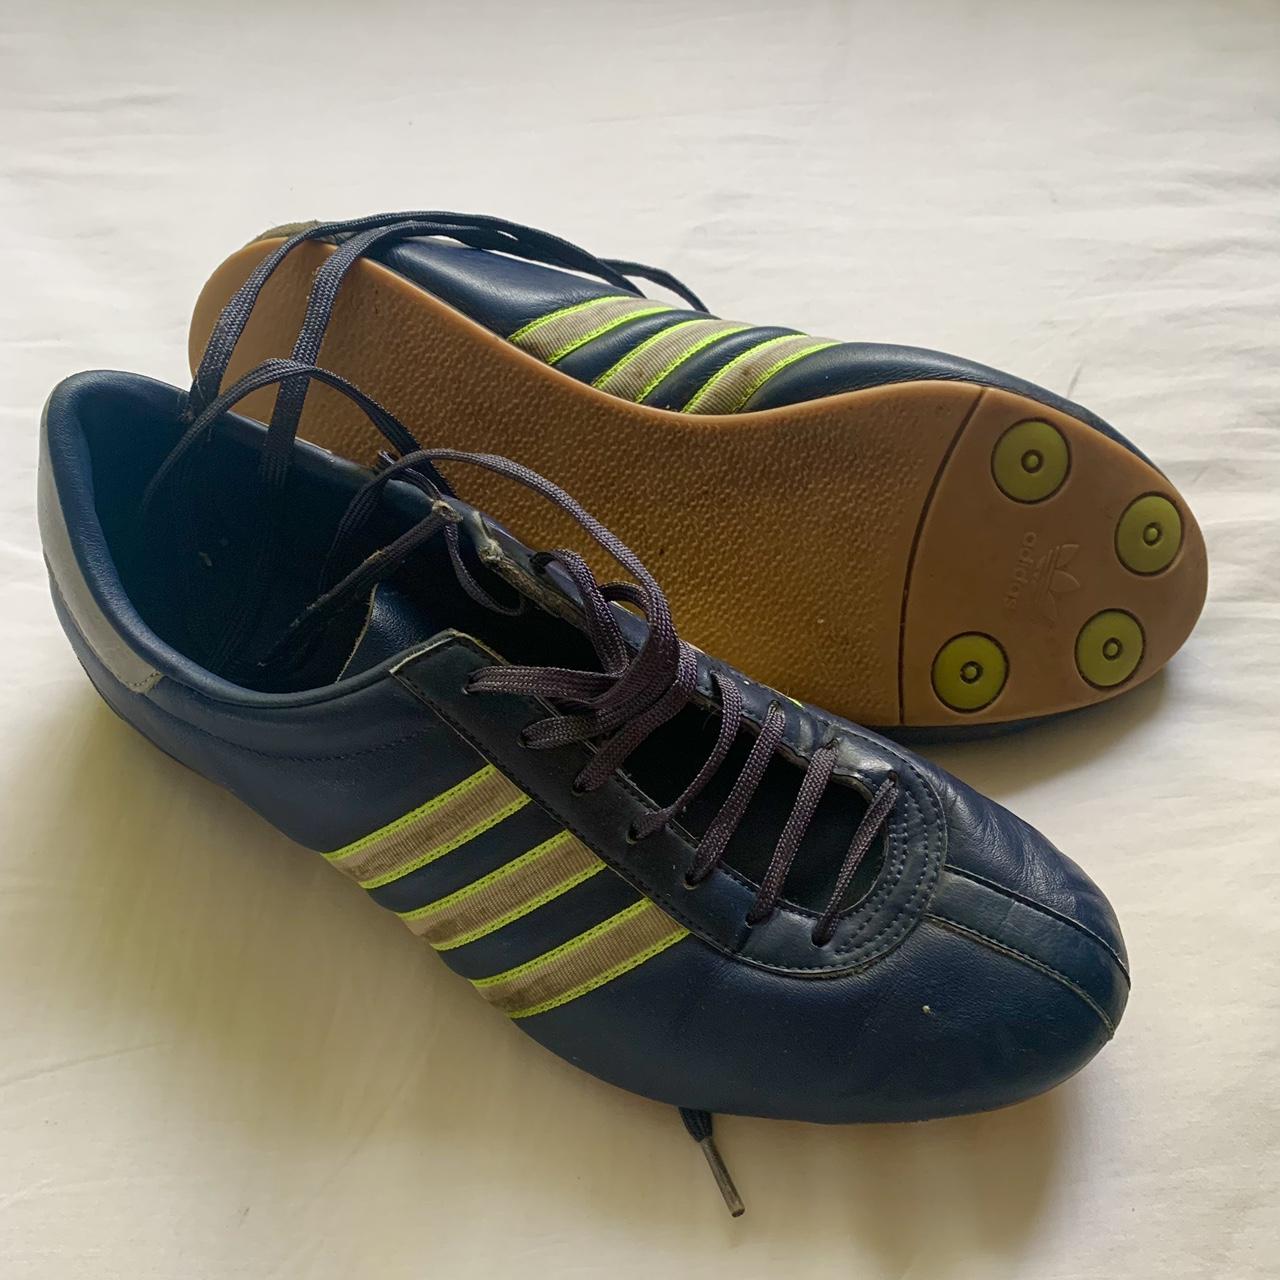 Adidas original ‘running spike’ trainer - not actual... - Depop